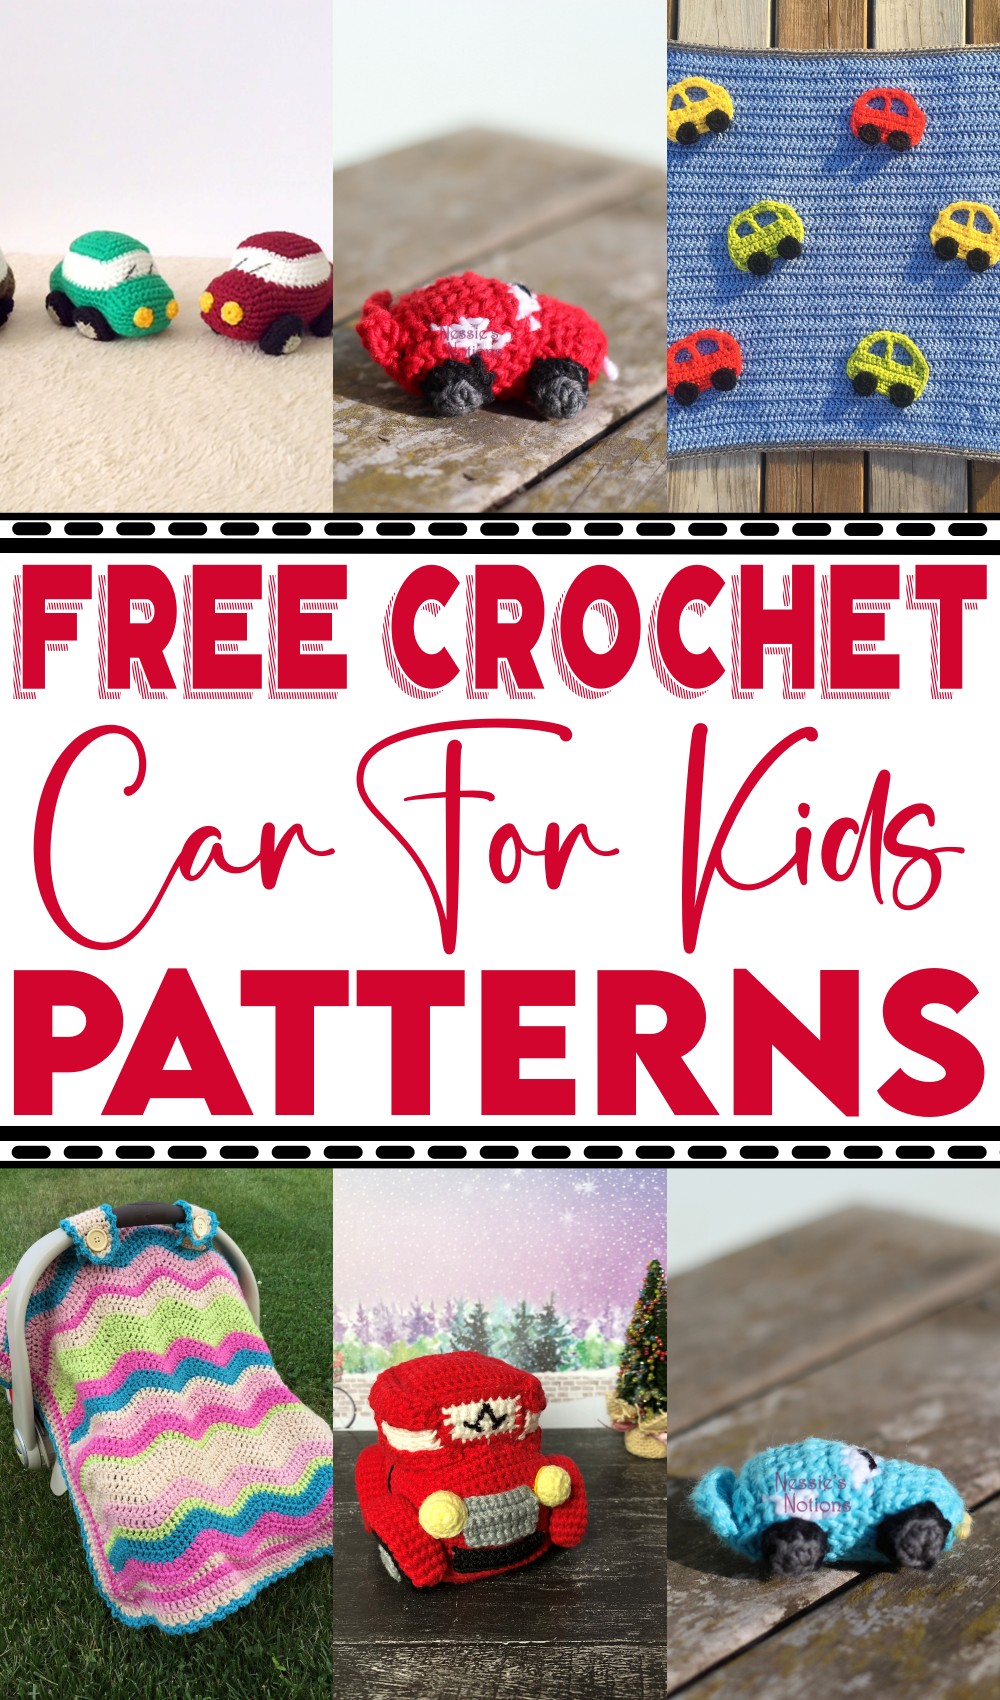 Free Crochet Car Patterns For Kids